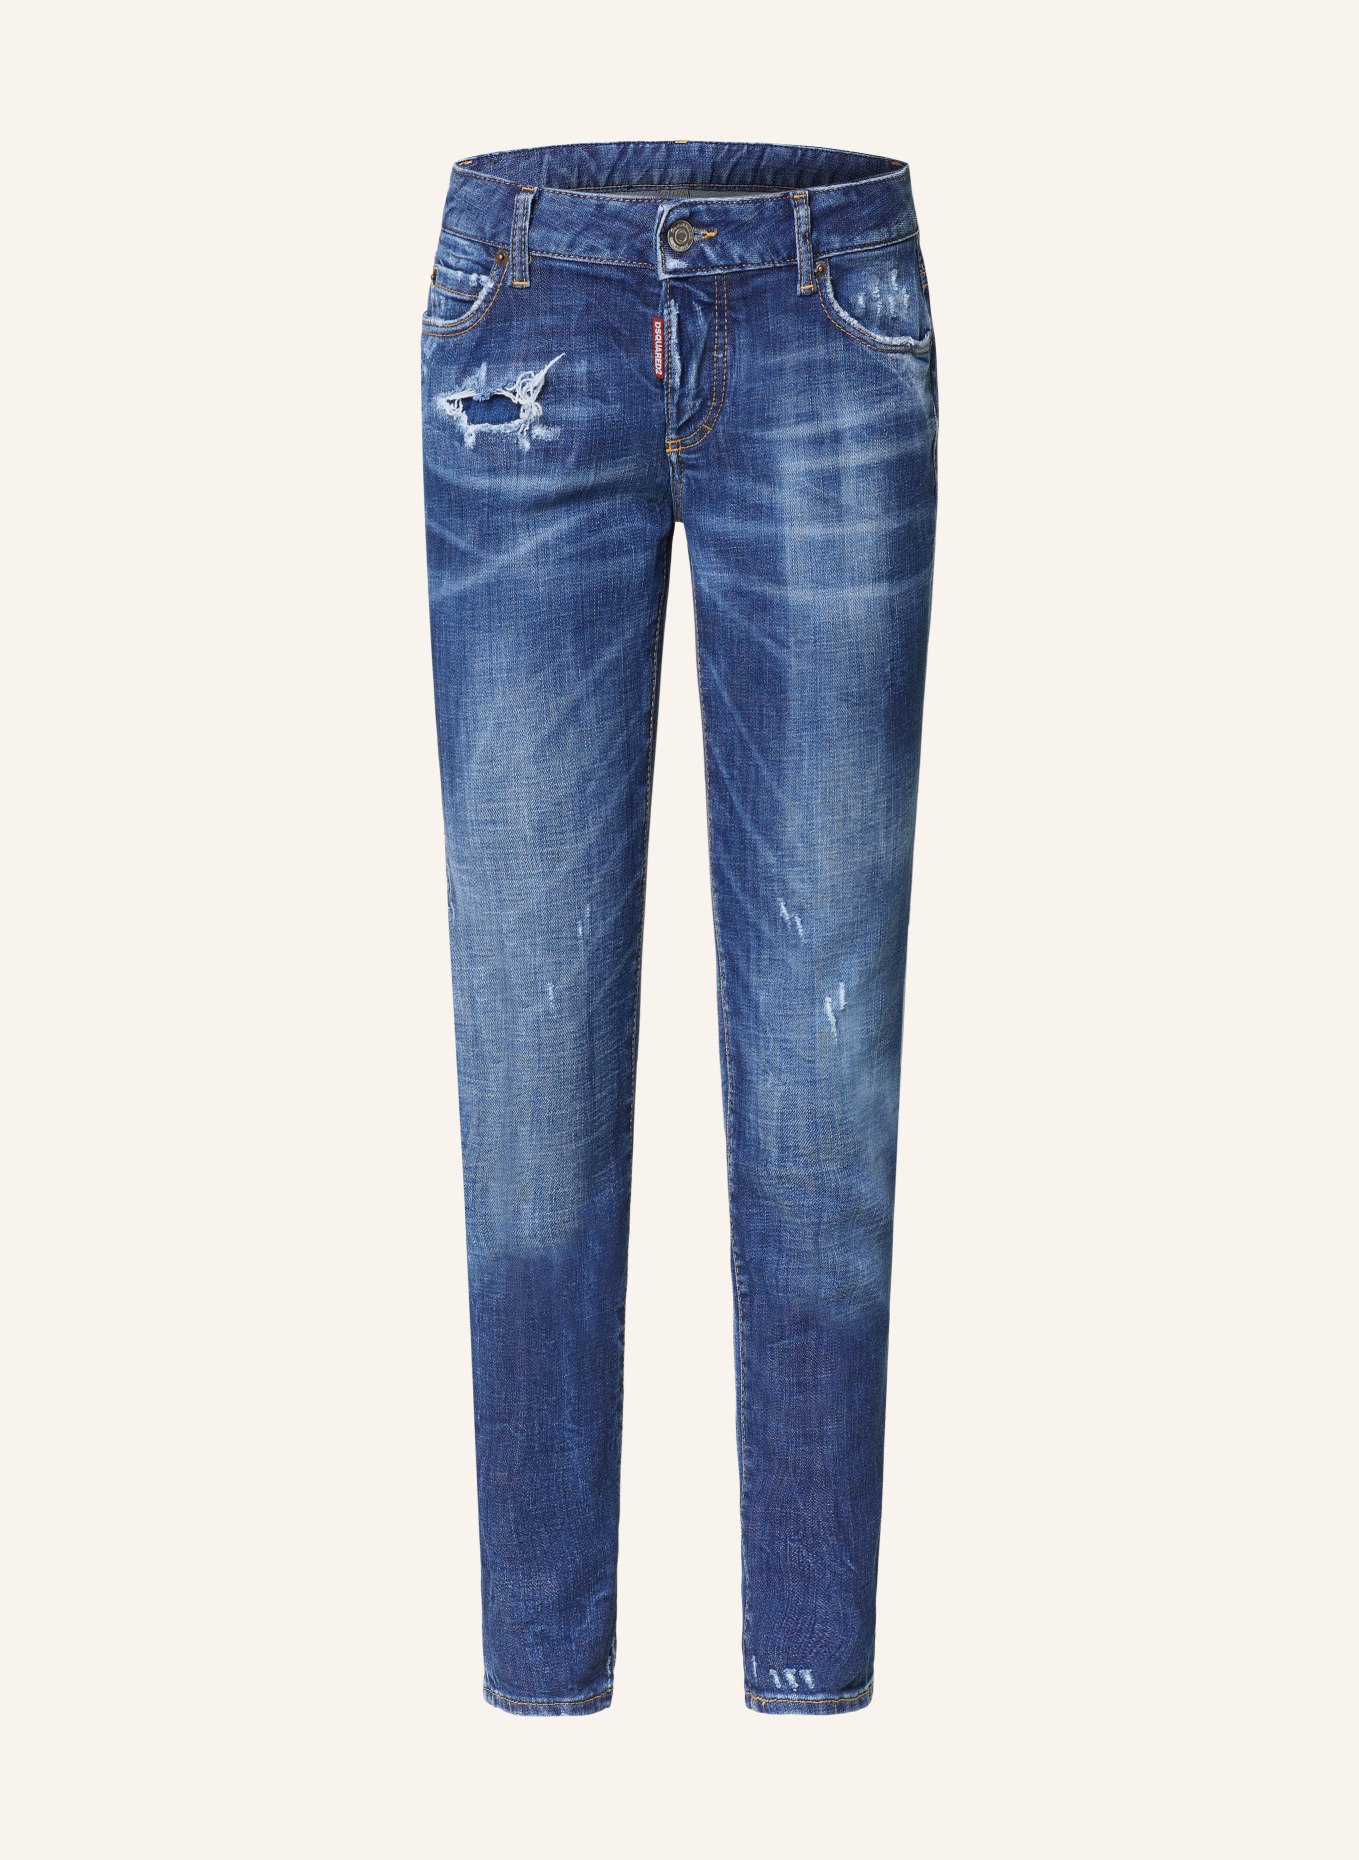 DSQUARED2 Jeans JENNIFER, Farbe: 470 NAVY BLUE (Bild 1)